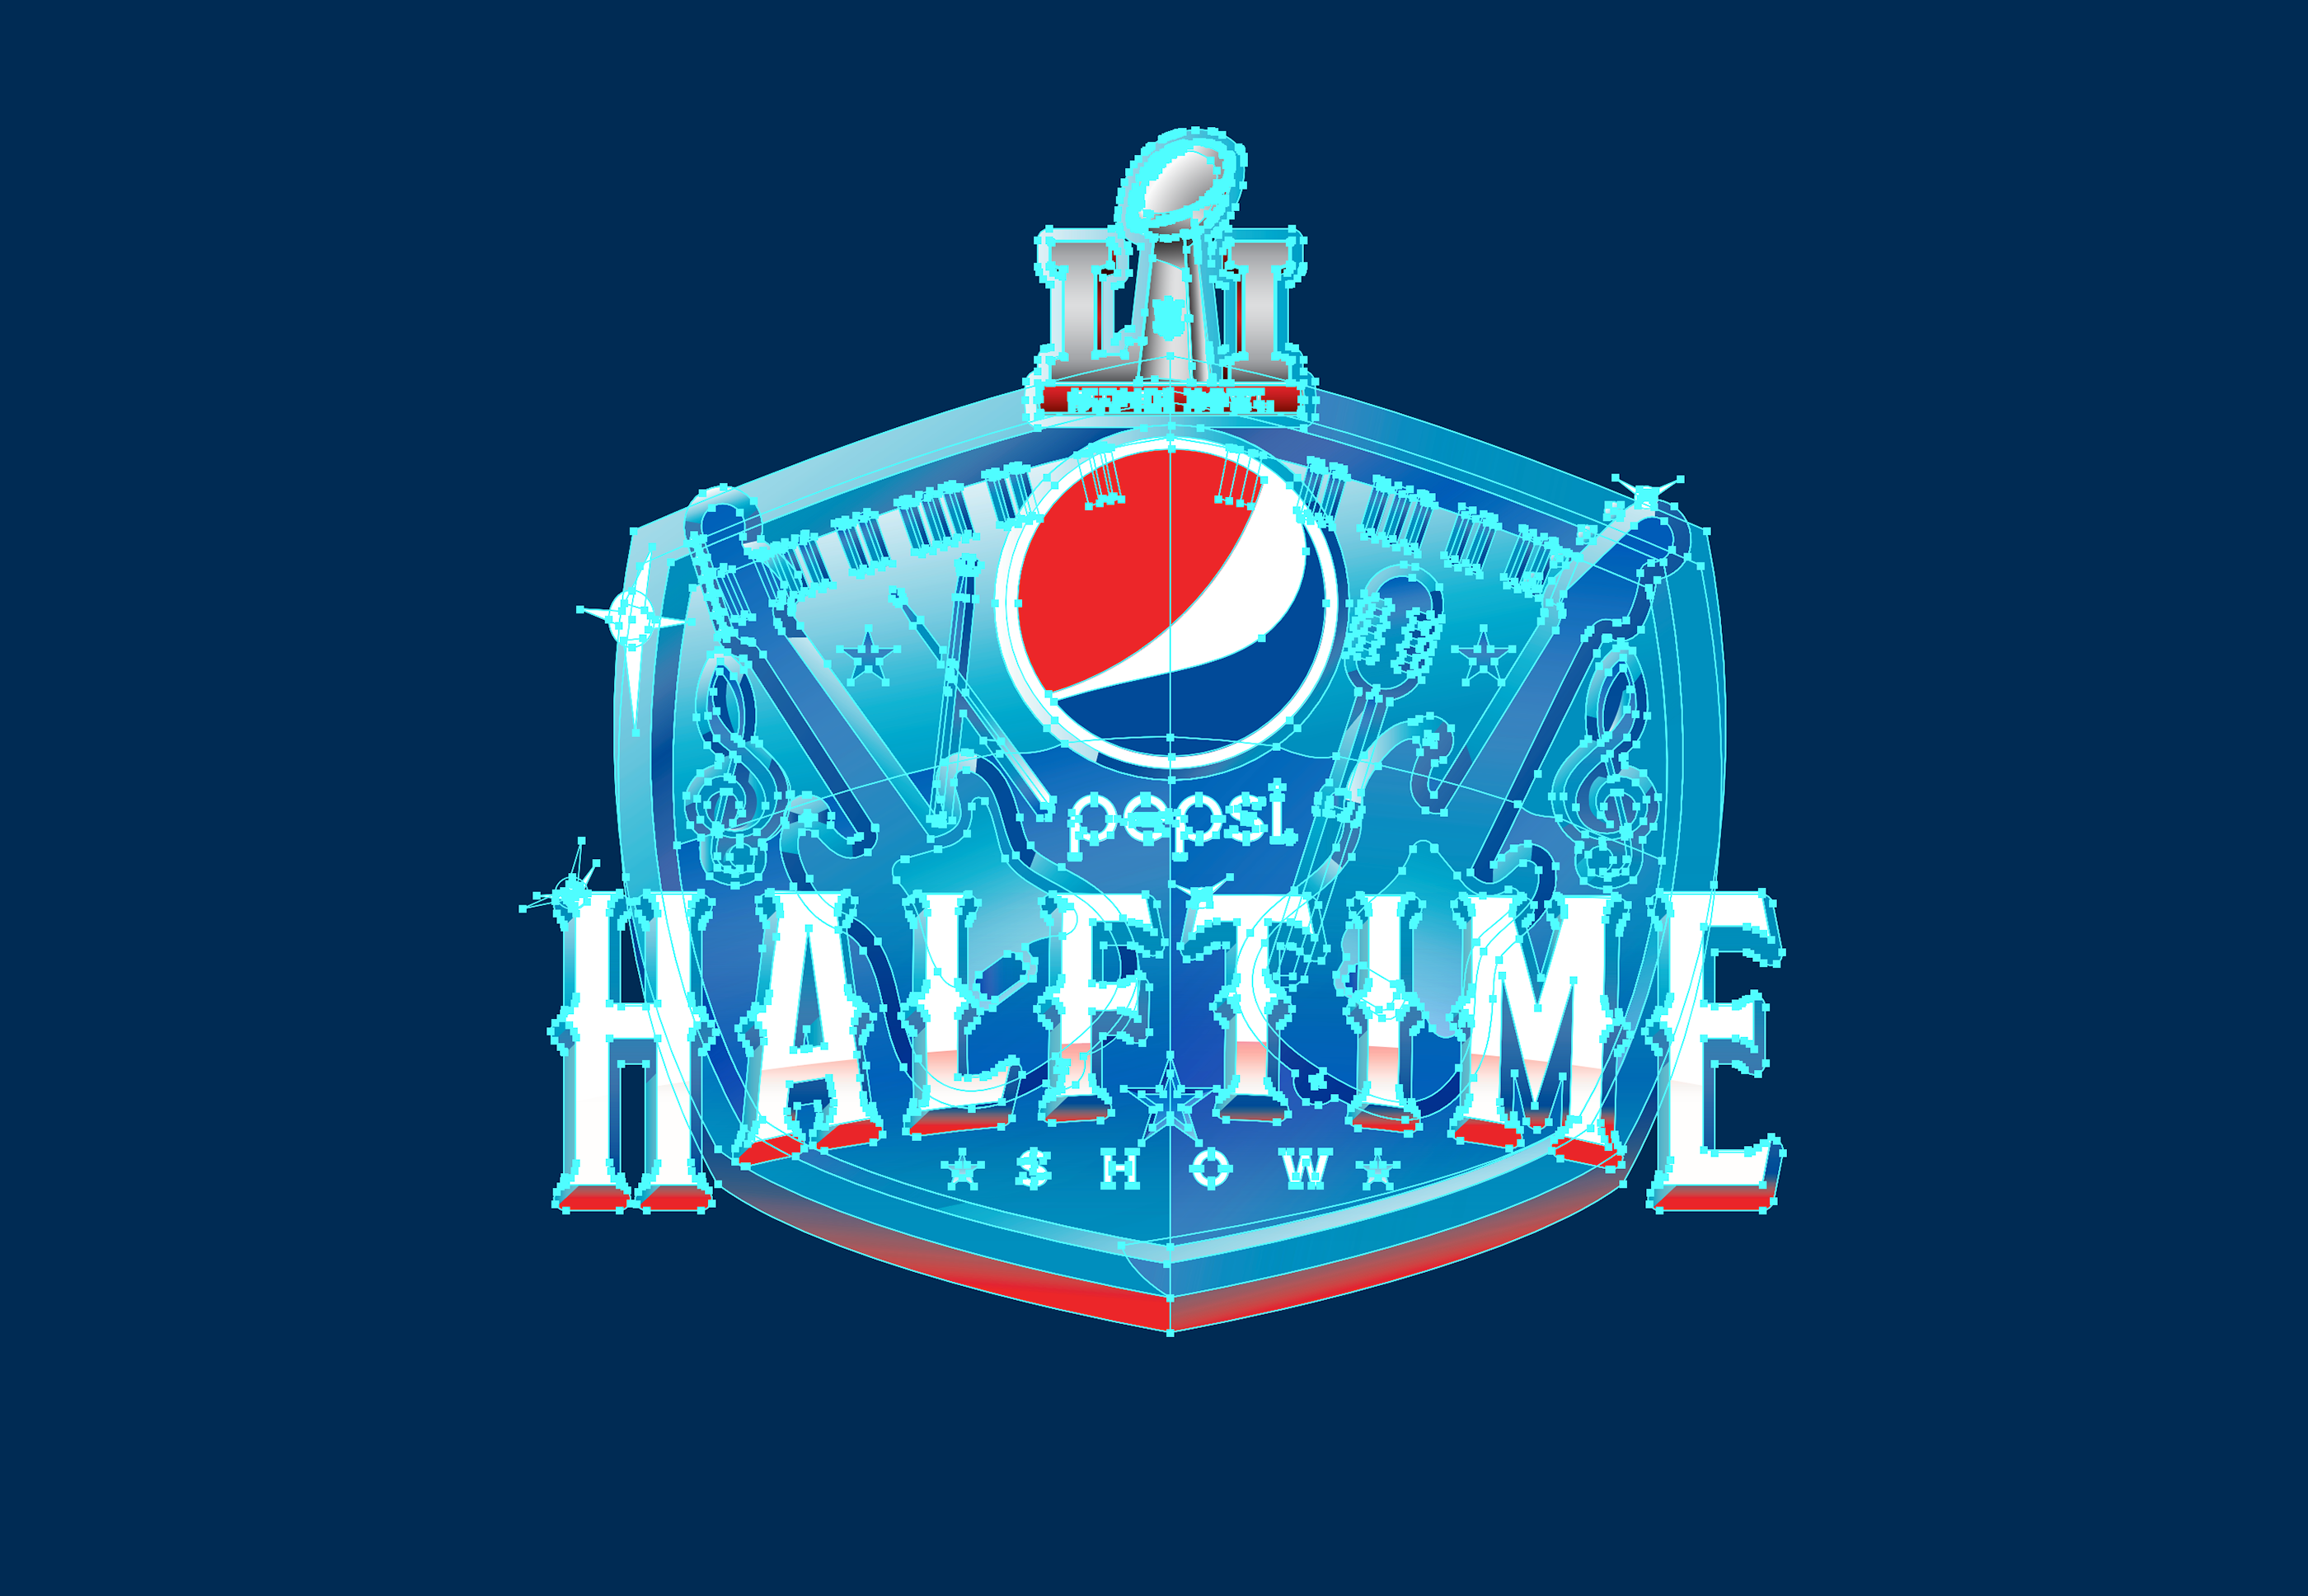 Superbowl halftime show. The Pepsi super Bowl LVI Halftime show. Super Bowl Halftime show логотип. Super Bowl лого. Pepsi super Bowl.